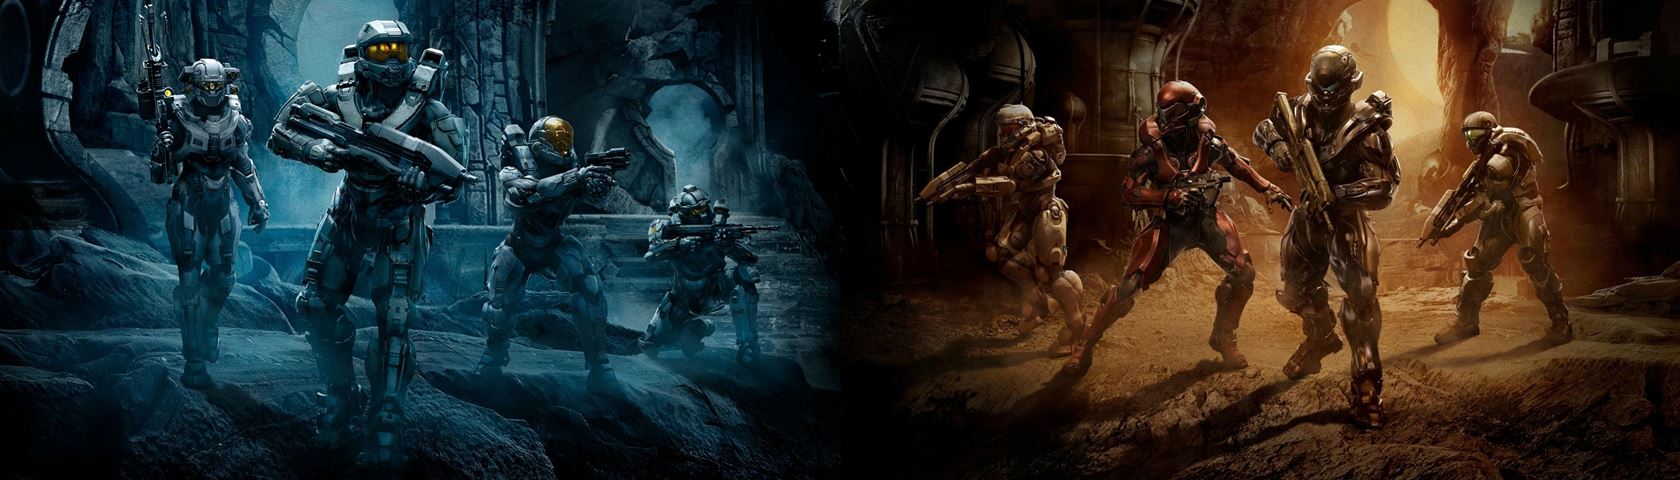 Halo 5 Guardians - Halo 5 Fireteam Osiris , HD Wallpaper & Backgrounds